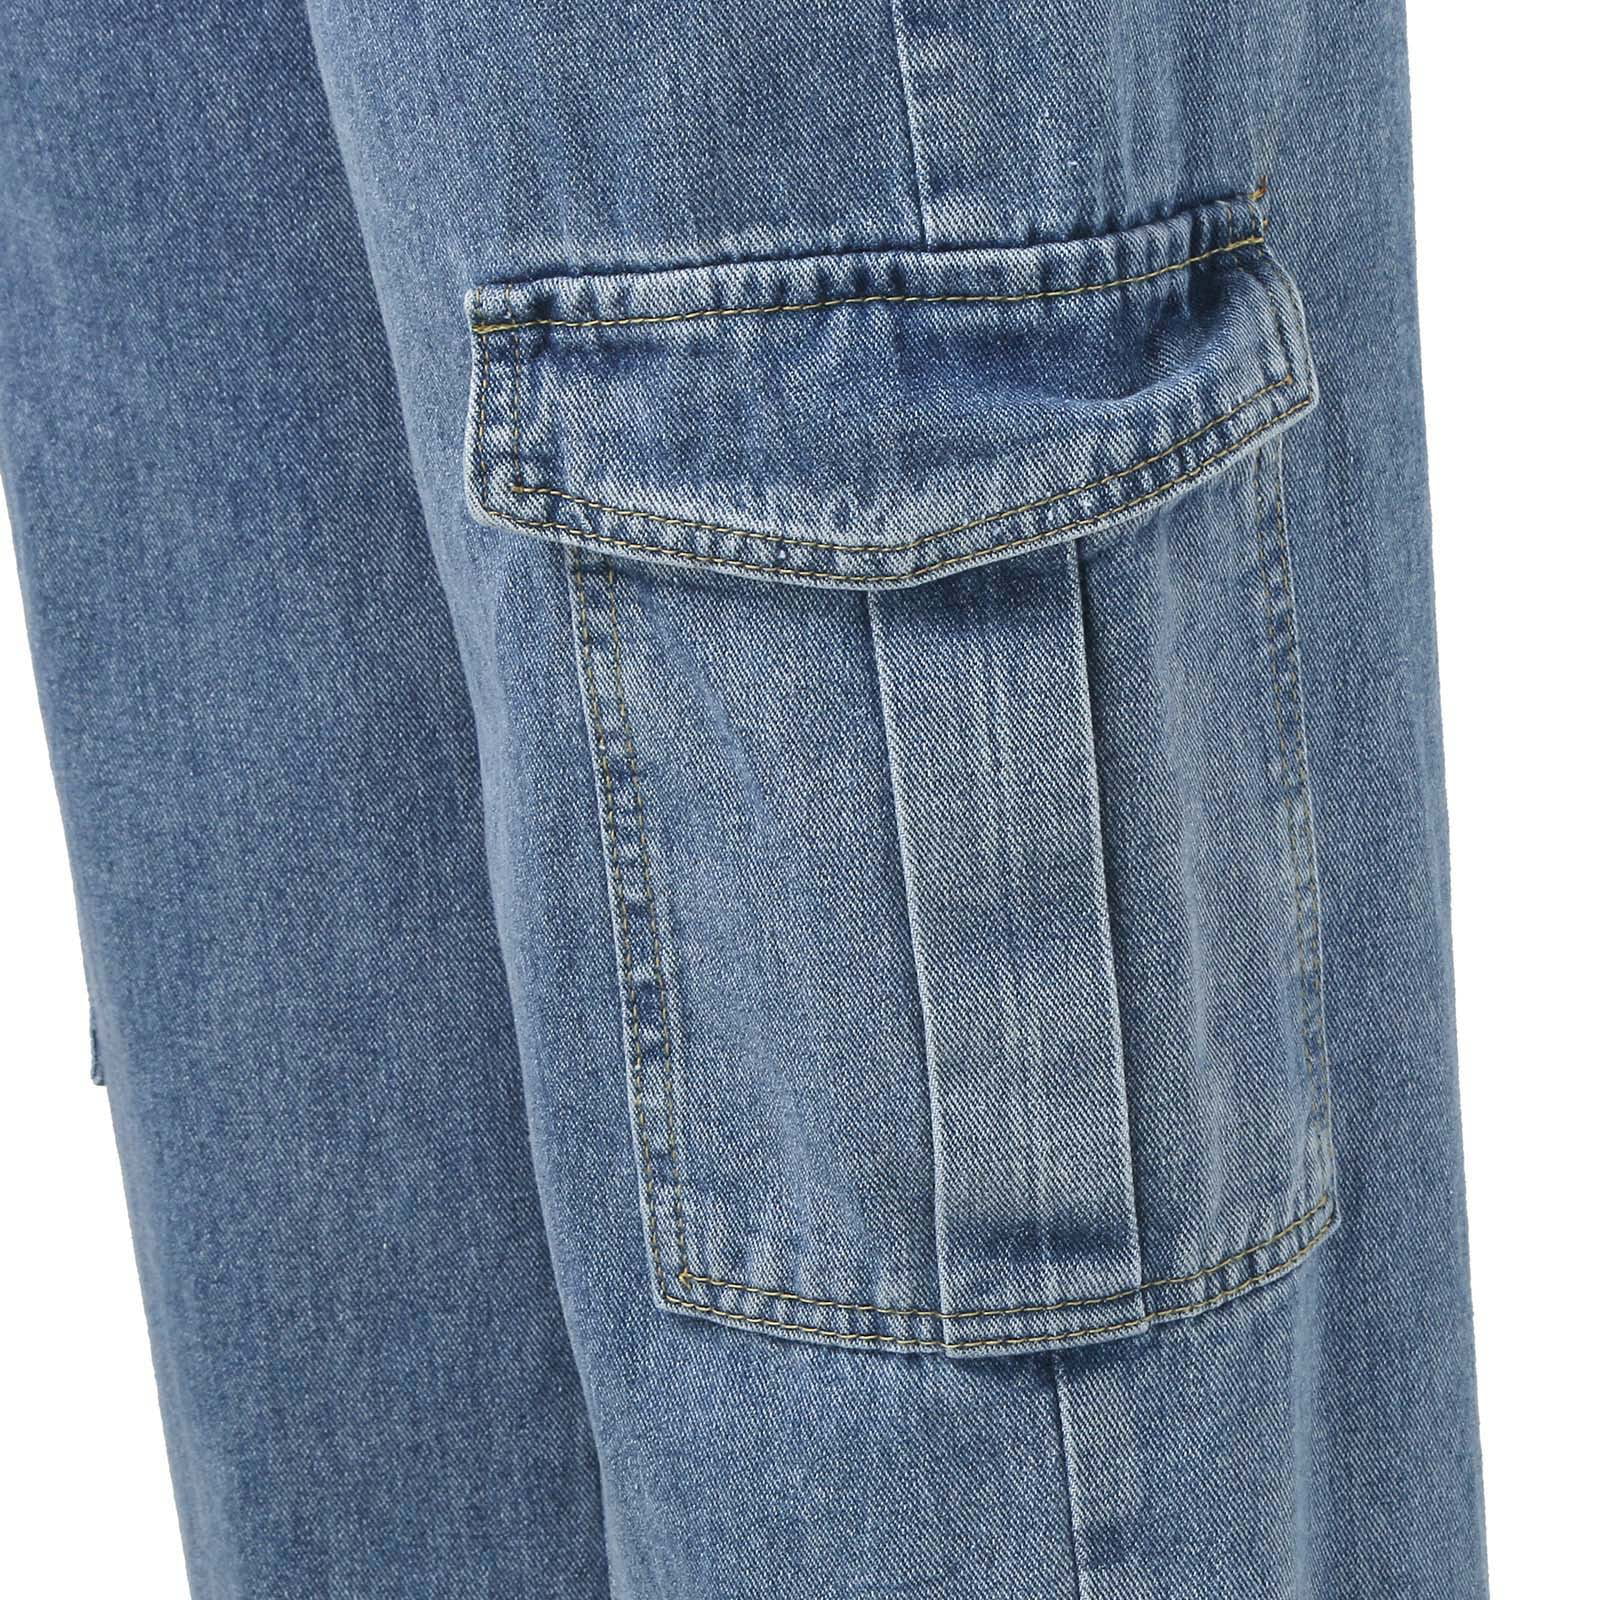 haxmnou women casual high waisted cargo pants wide leg casual denim trousers  multi pocket cargo jeans blue xxl 